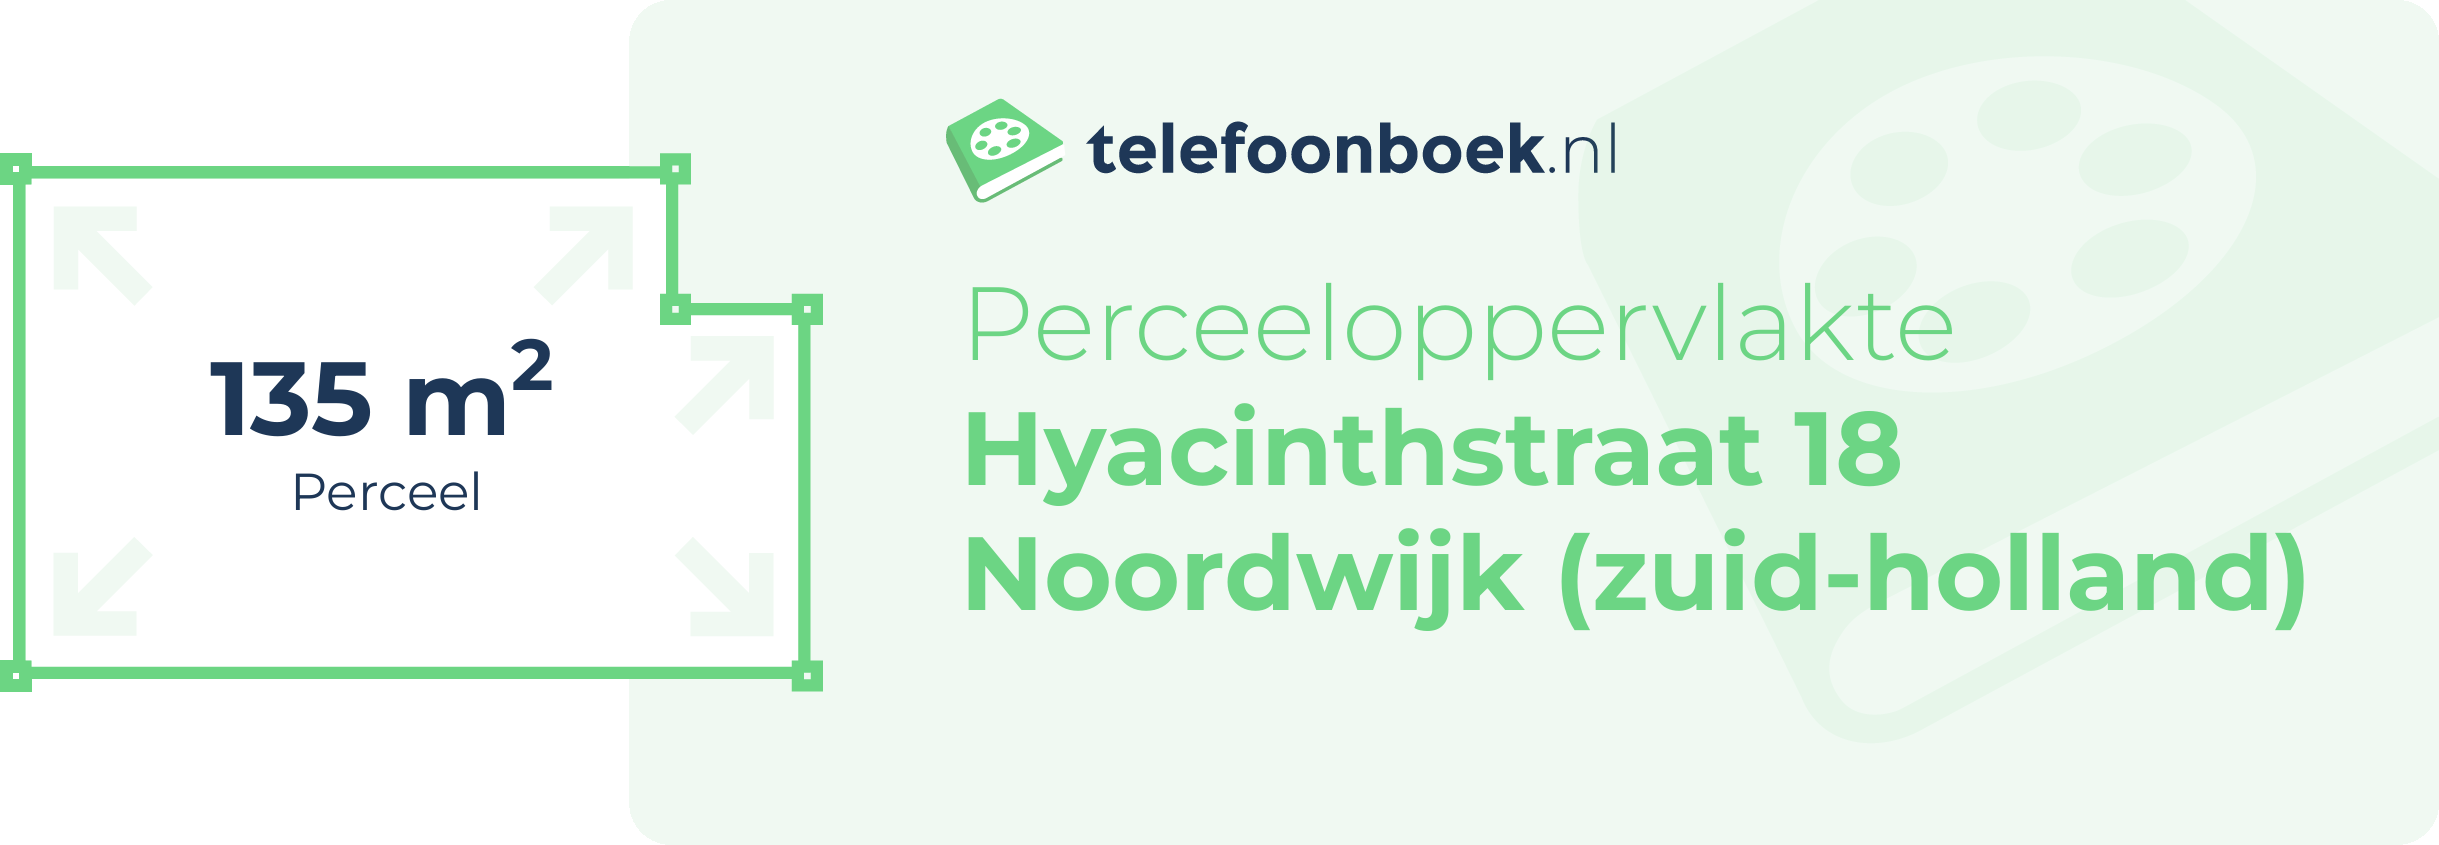 Perceeloppervlakte Hyacinthstraat 18 Noordwijk (Zuid-Holland)